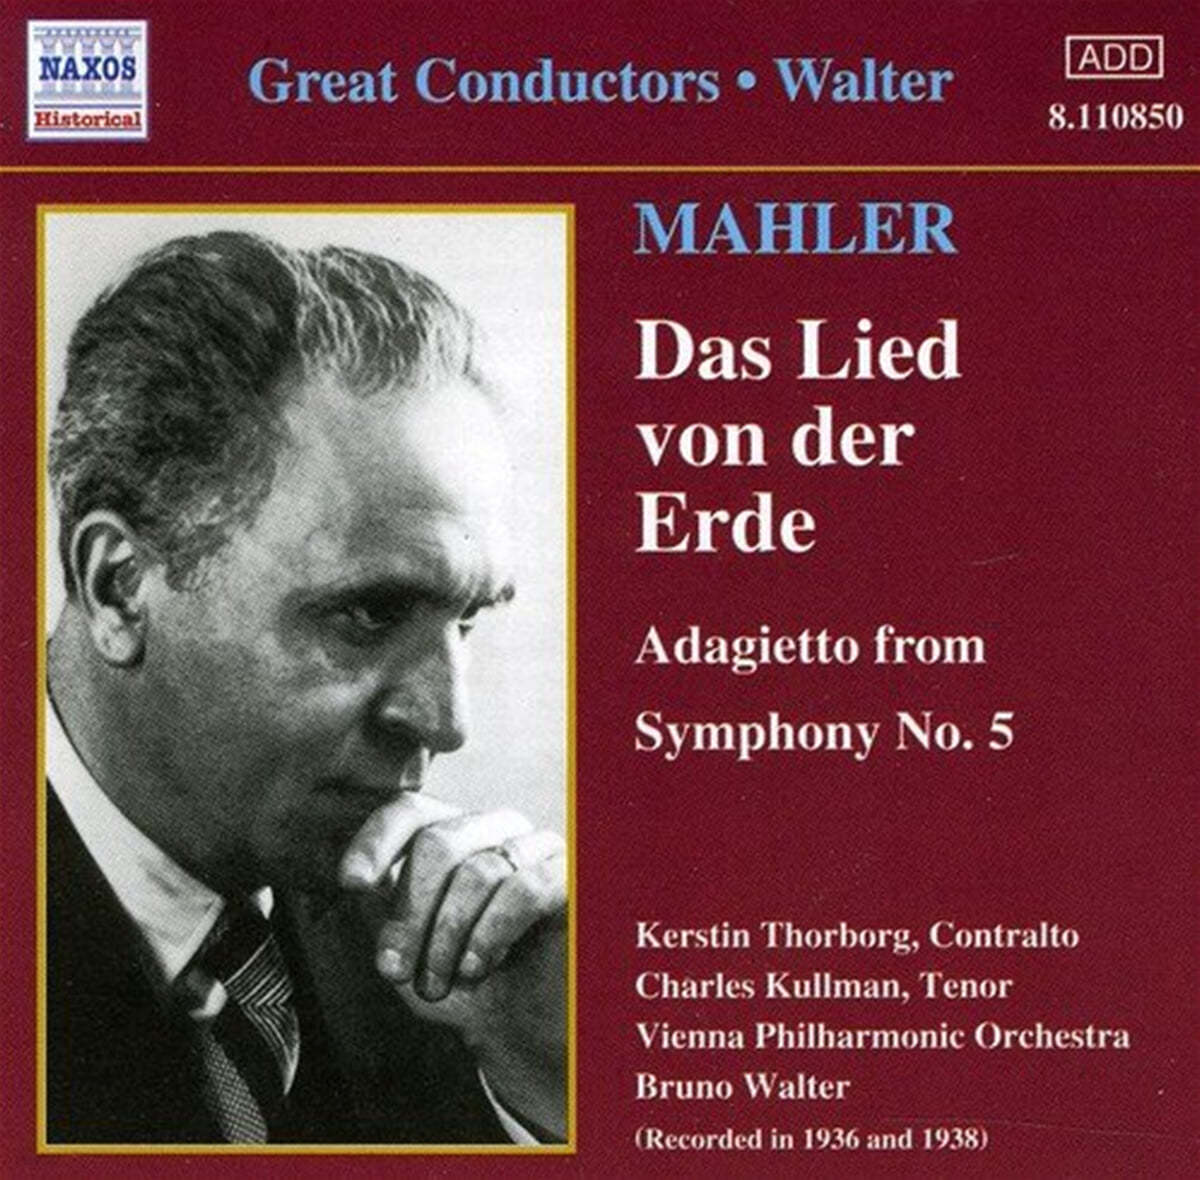 Bruno Walter 말러: 대지의 노래, 교향곡 5번 중 아다지에토 (Mahler: Das Lied von der Erde, Symphony No. 5 - adagietto) 